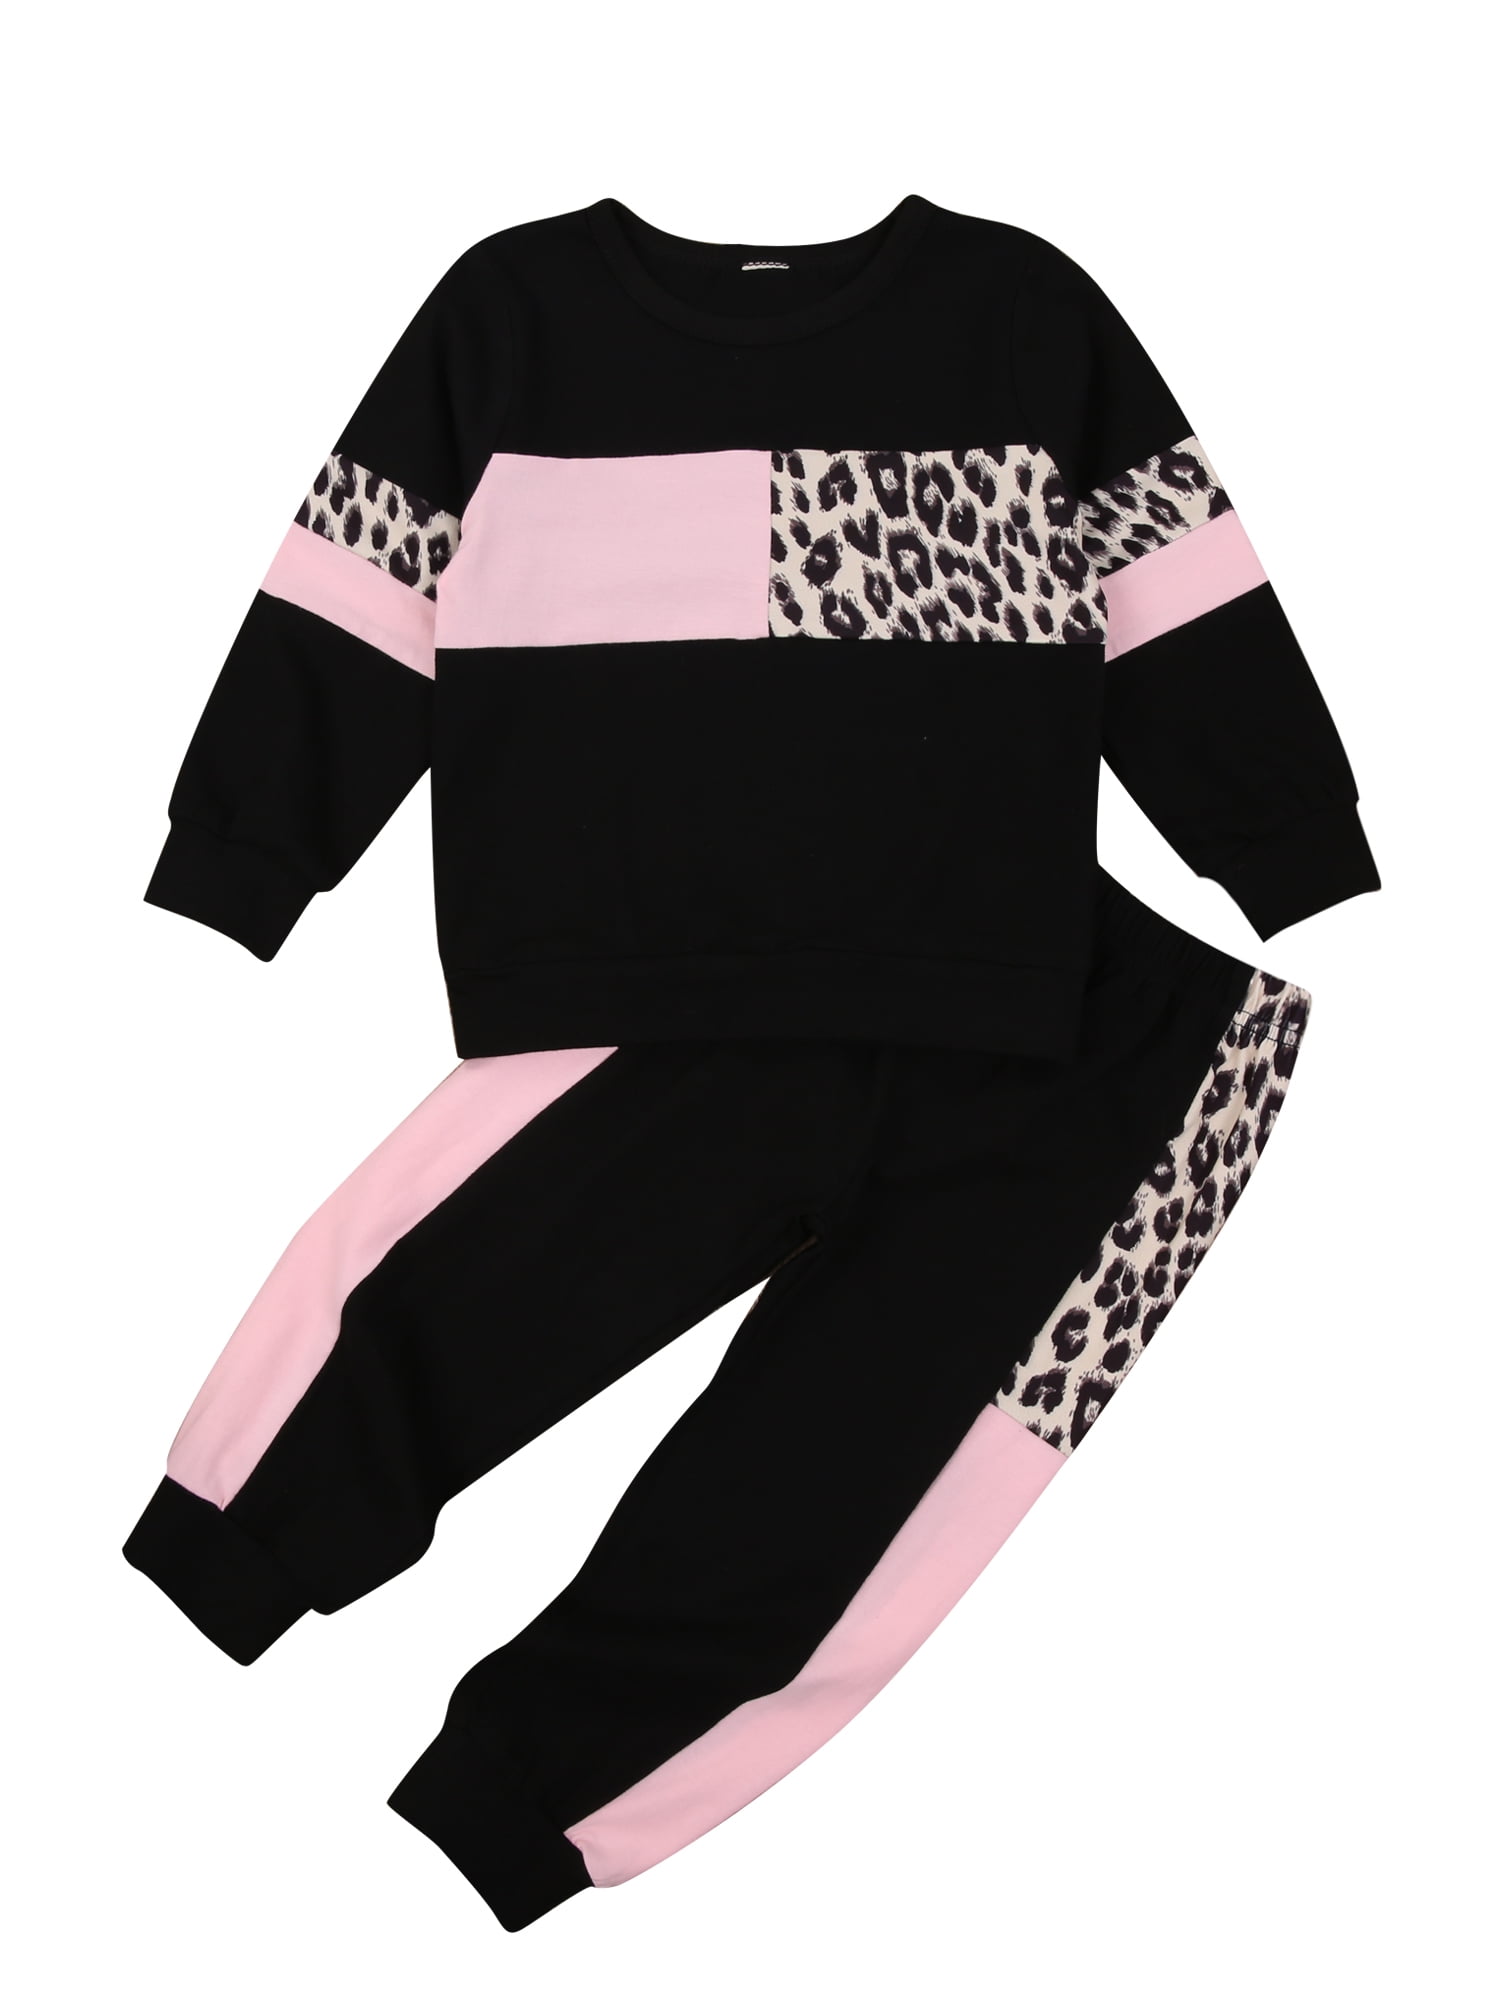 2pcs Toddler Kids Baby Girls Tracksuit Outfit Clothes T-shirt Top+Long Pants Set 